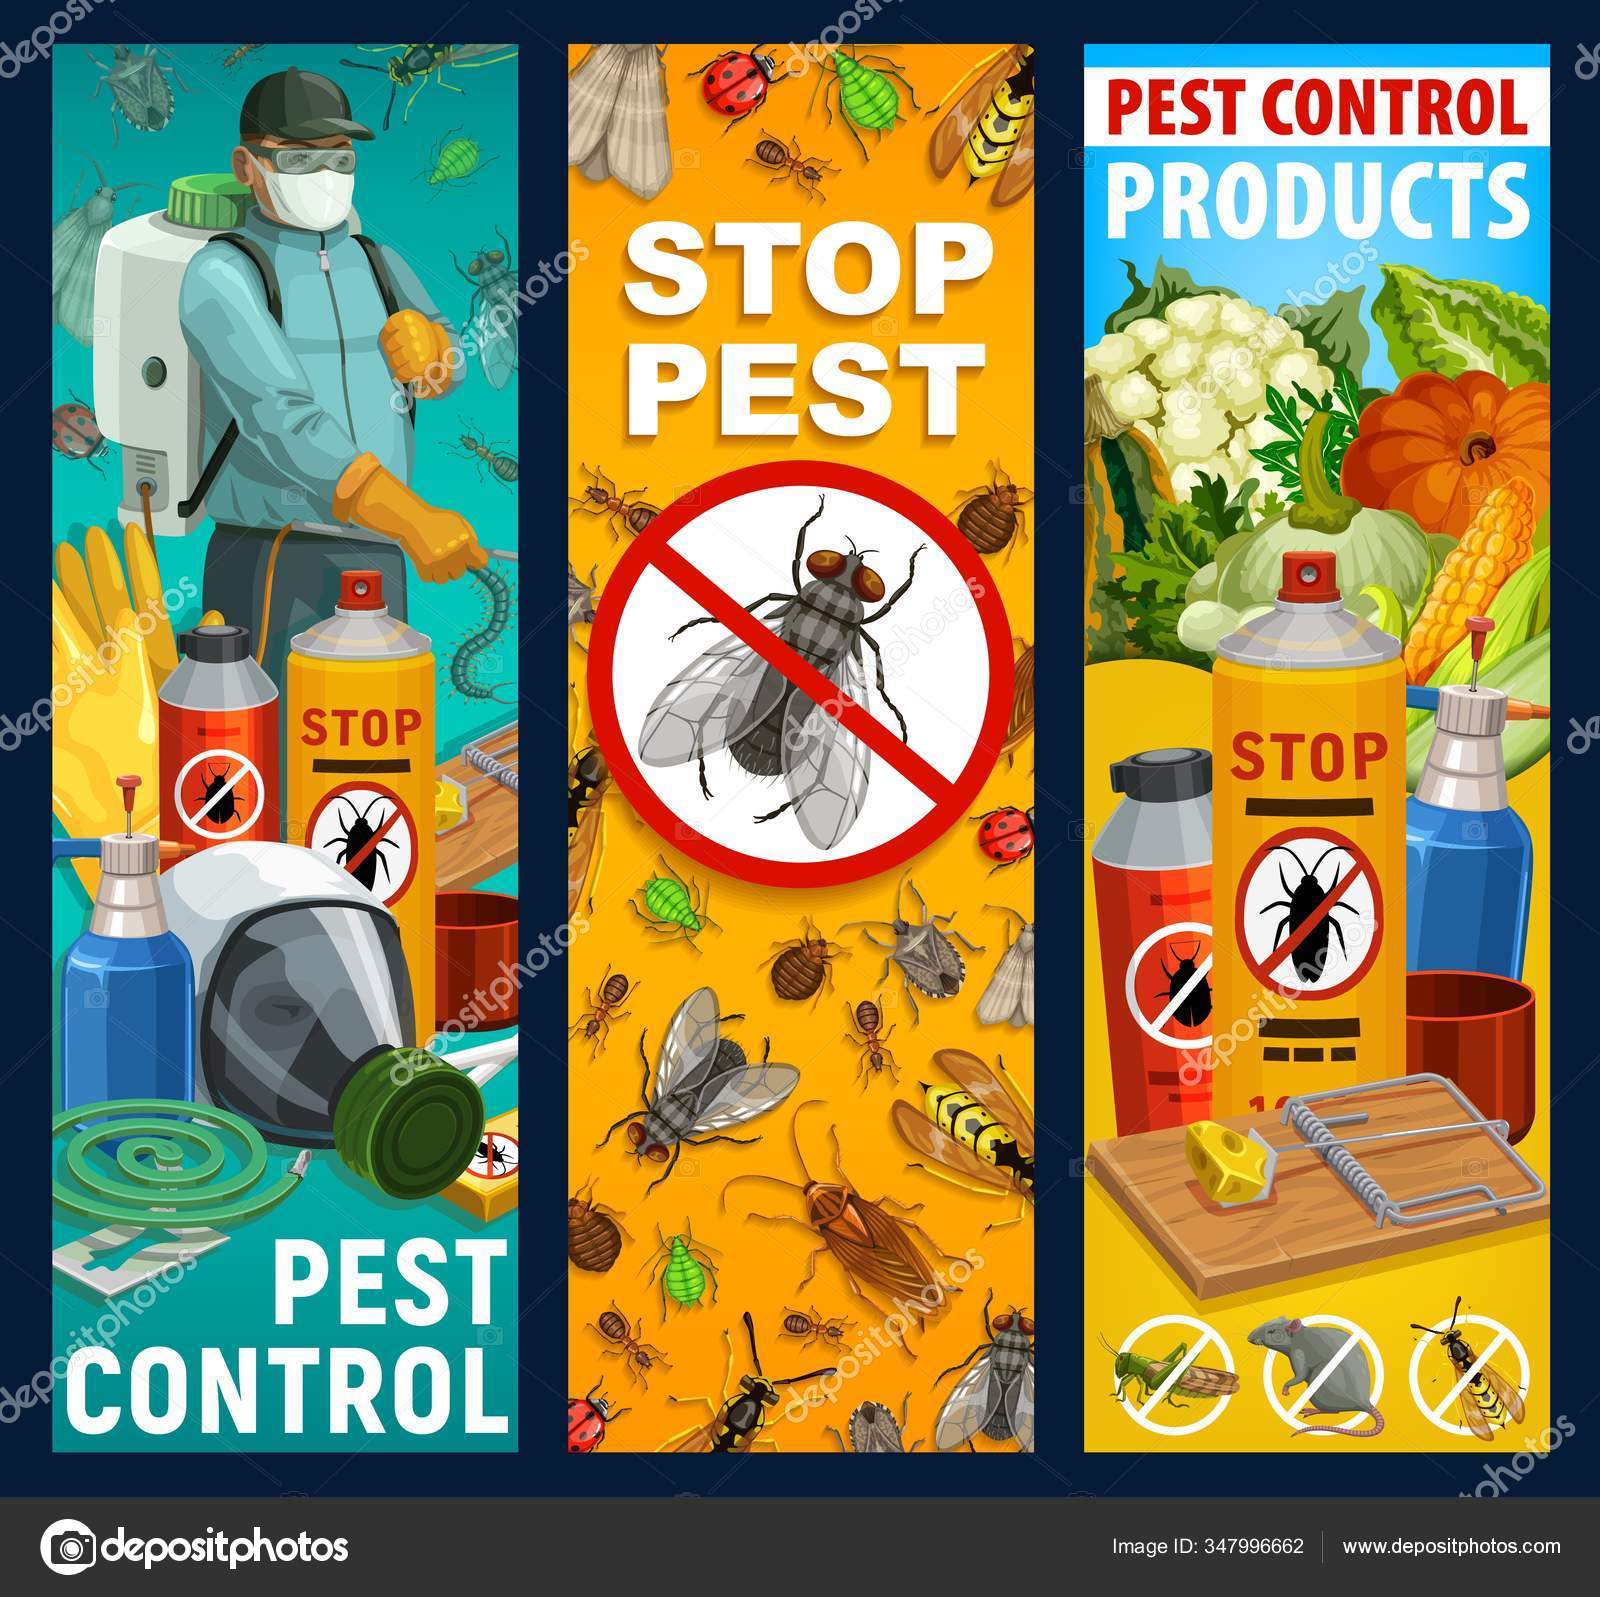 Mousetraps & Pest Control Products